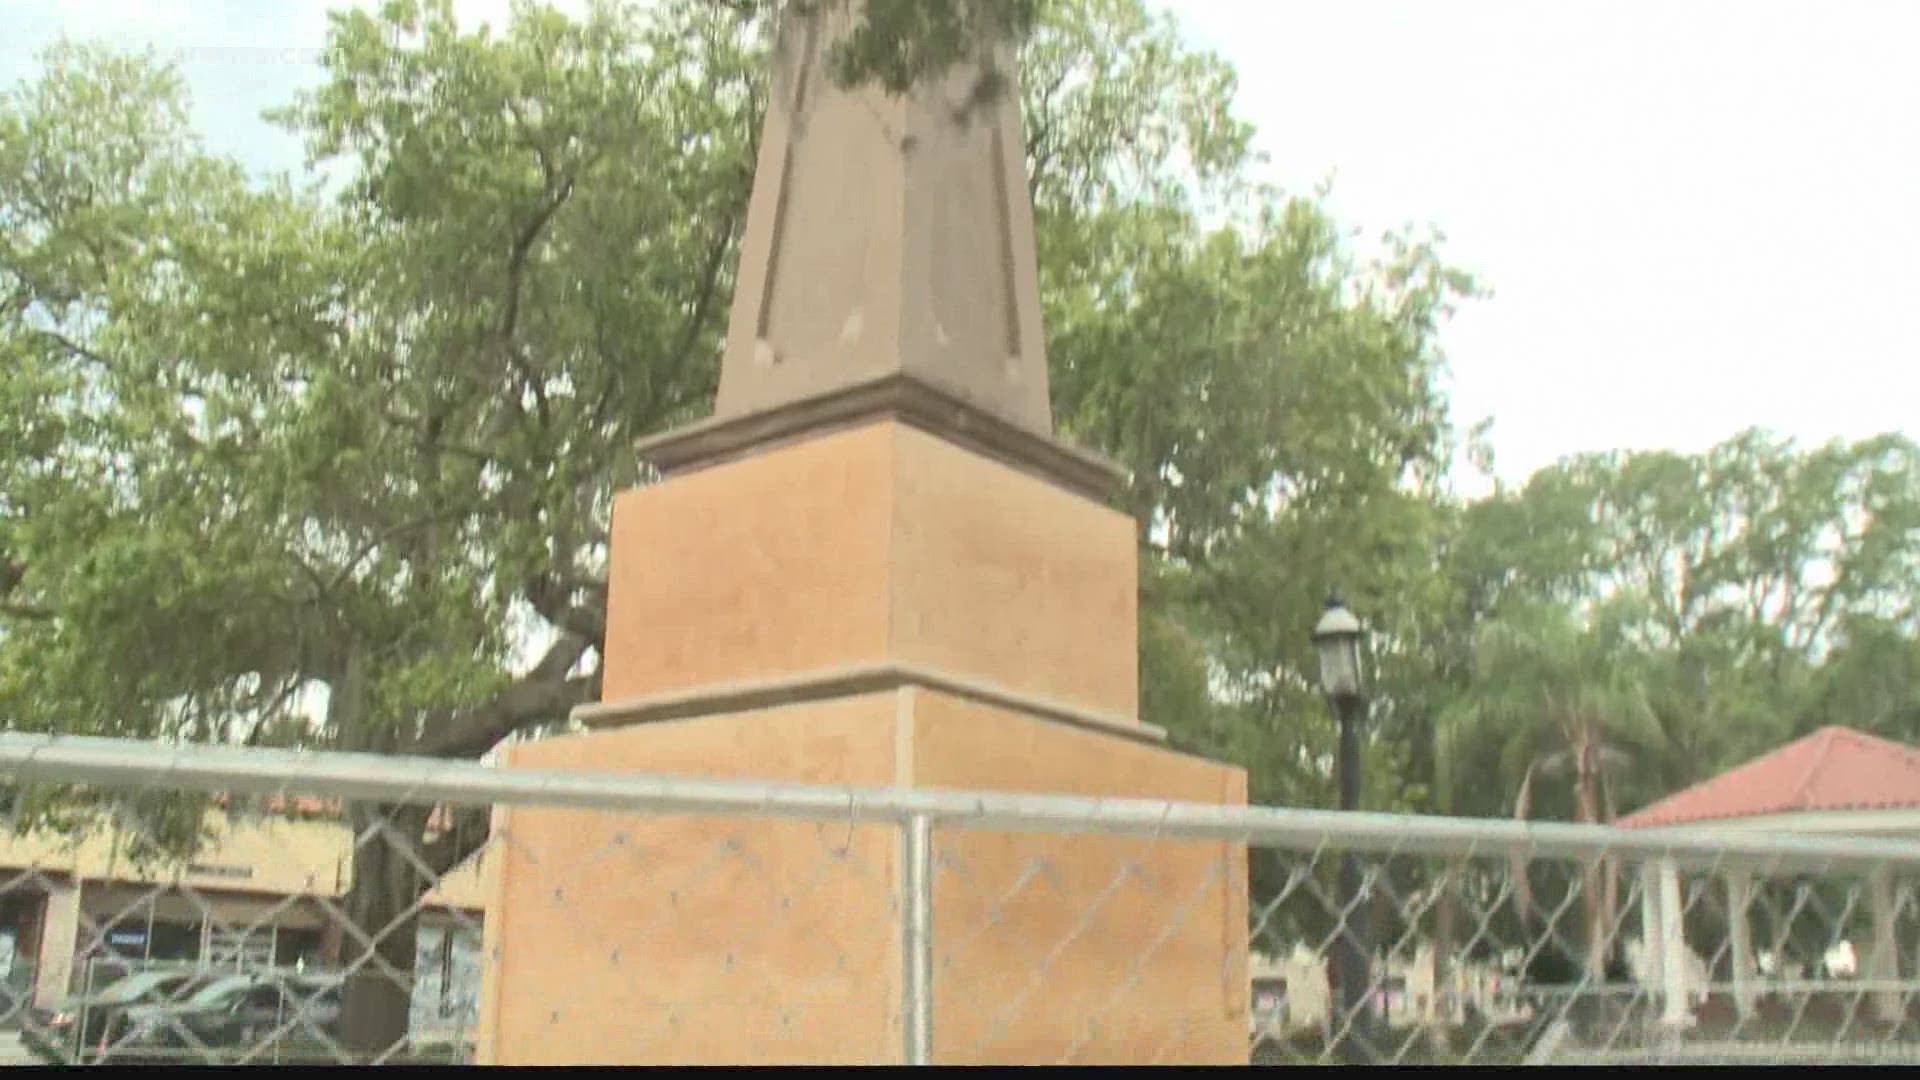 The city commission voted 3-2 to move the monument out of the Plaza de la Constitucion.